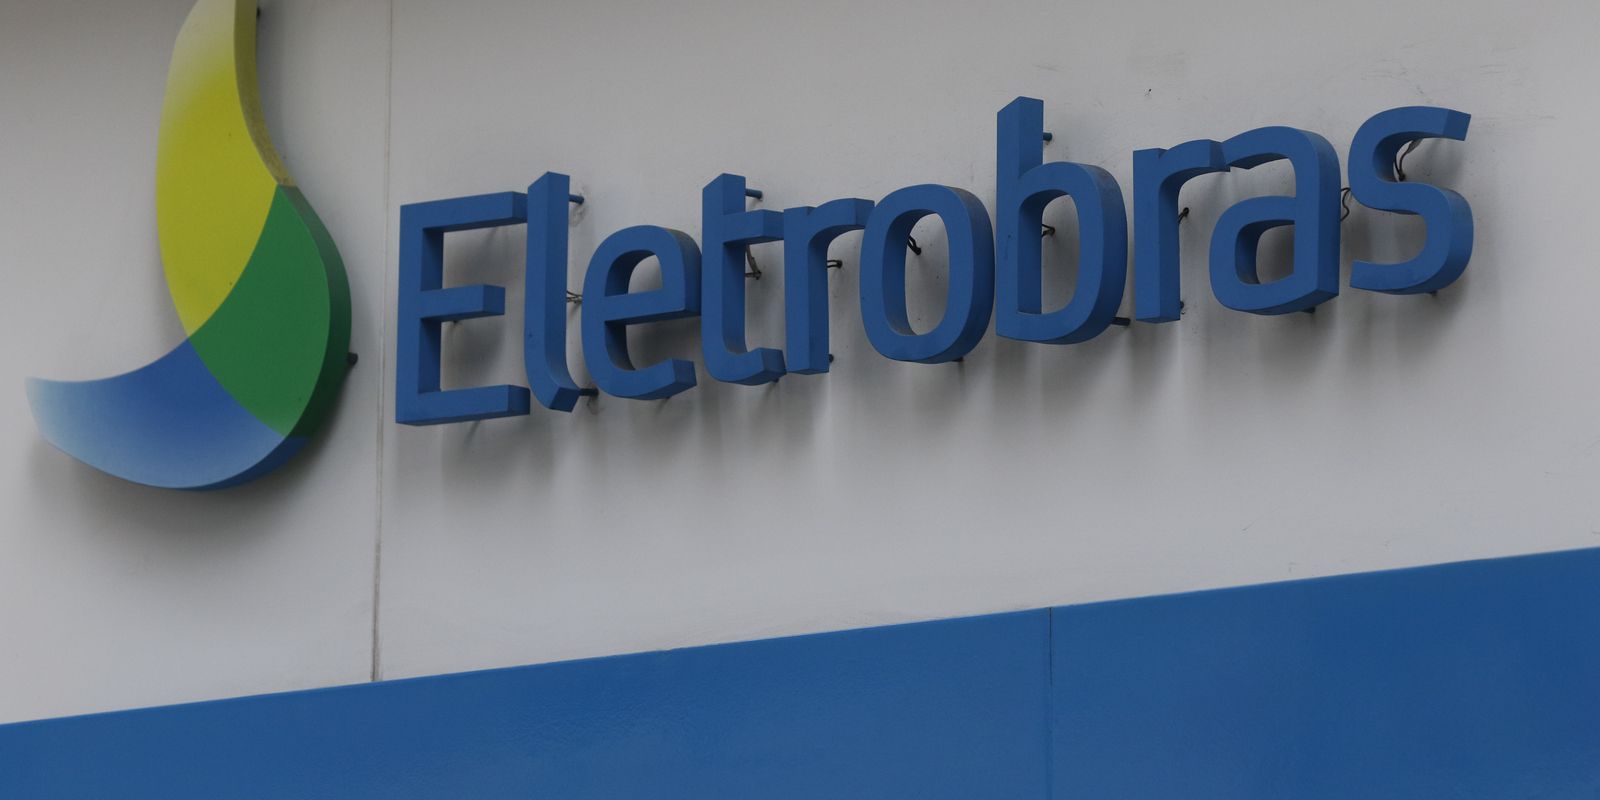 Eletrobras approves share buyback program